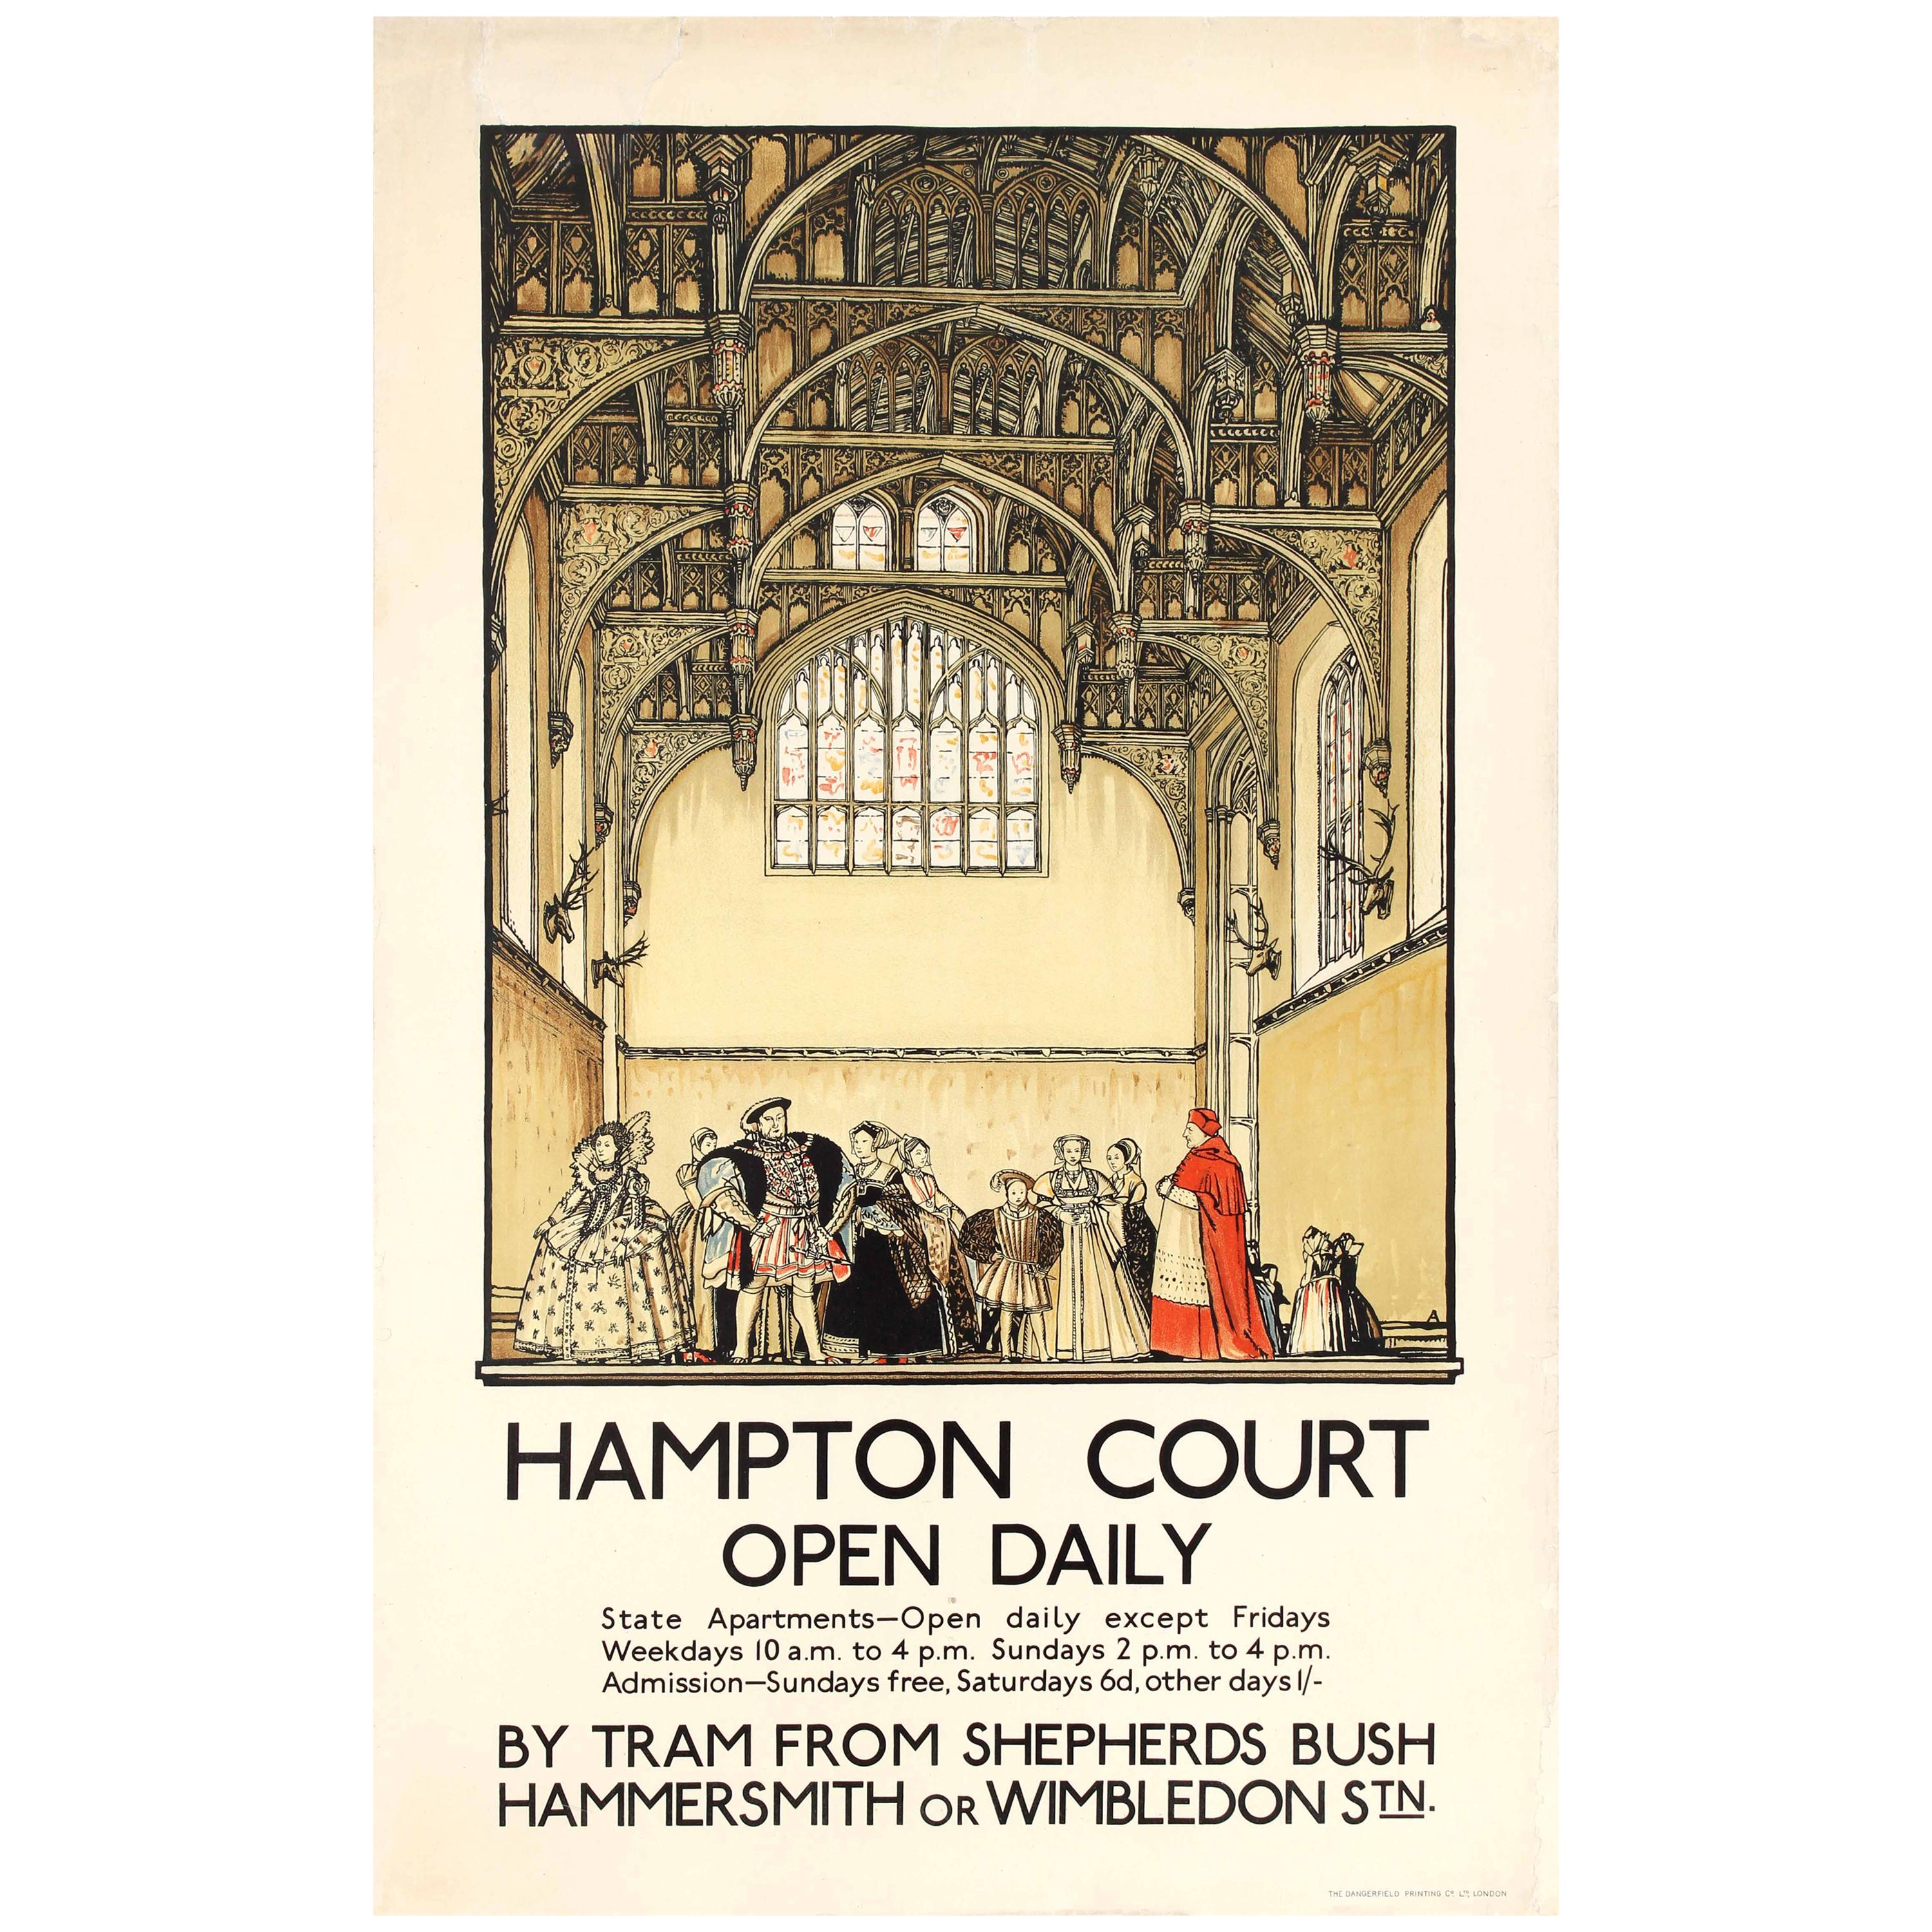 Original Vintage London Transport Poster Hampton Court Palace King Henry VIII